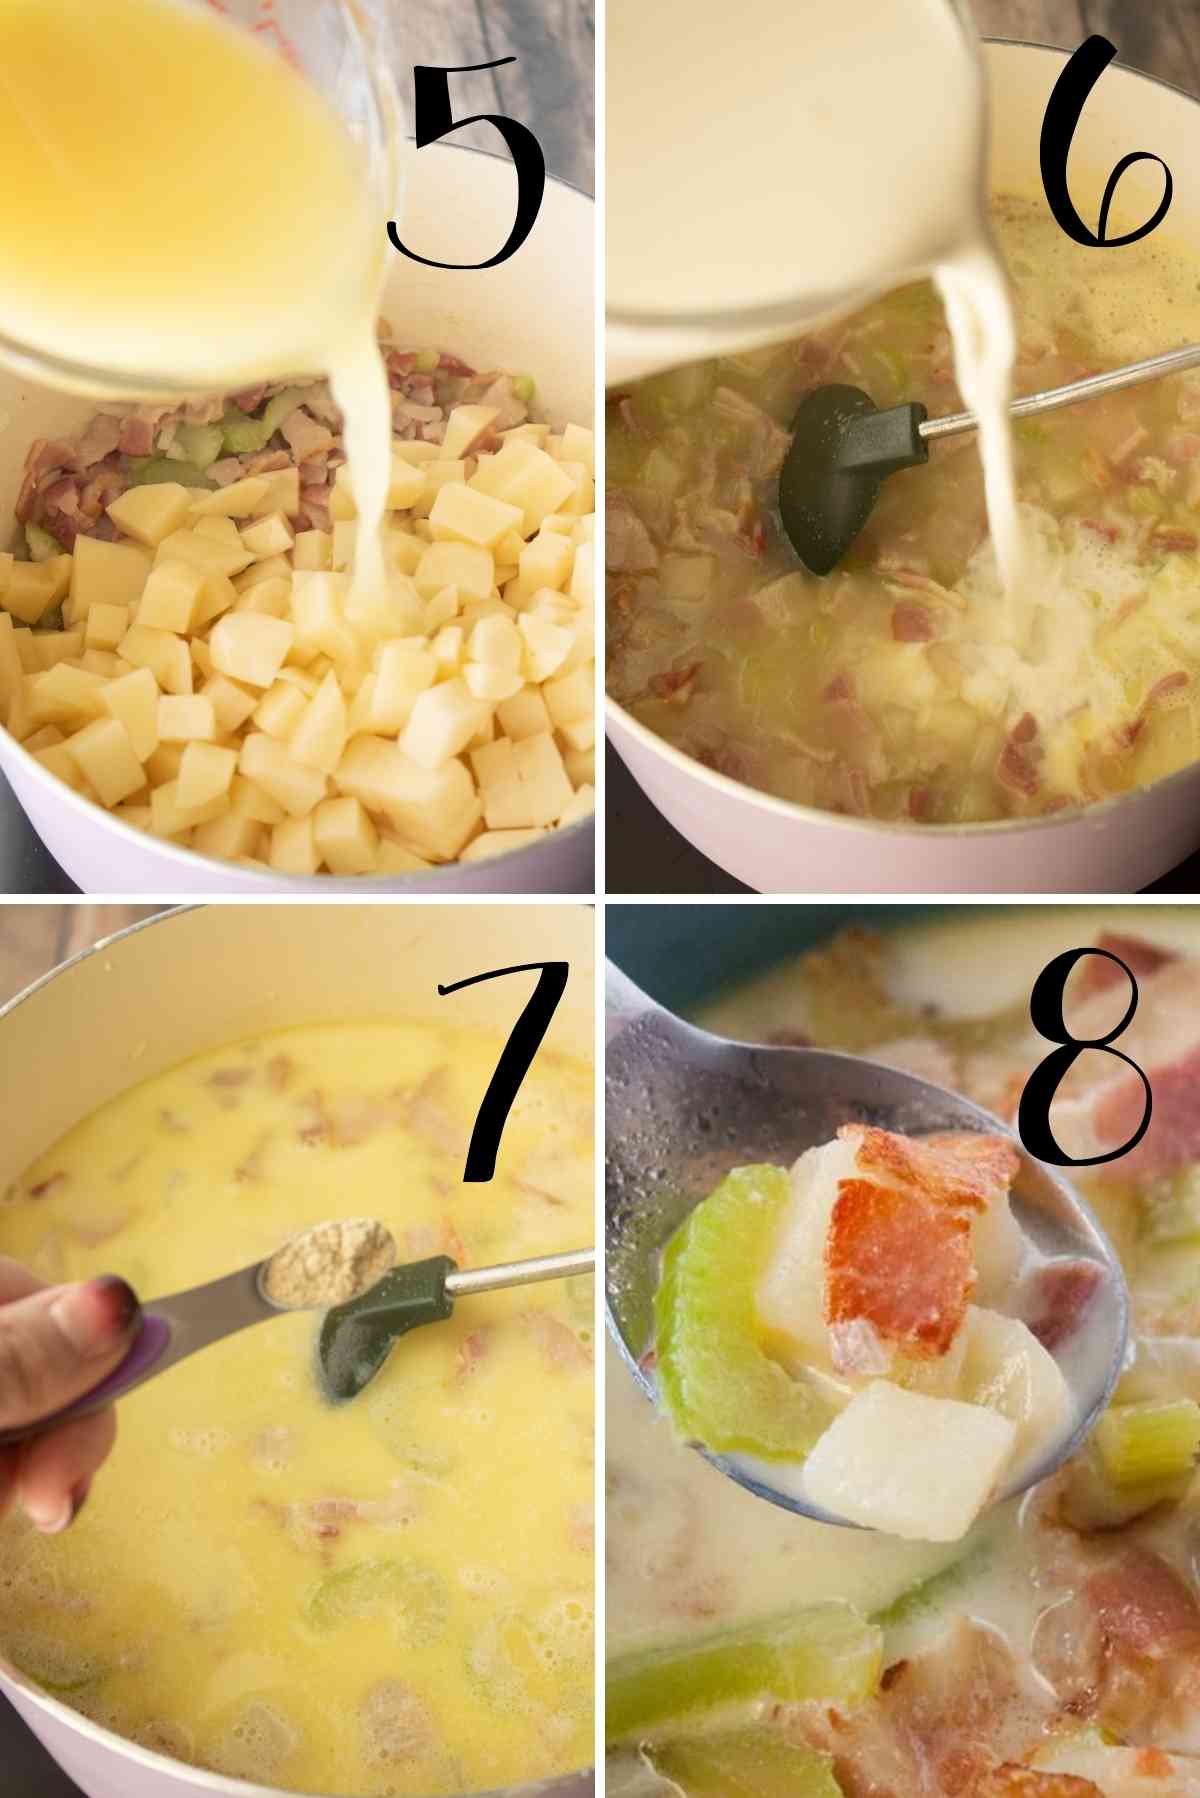 Add warm whole milk for a creamy potato soup.